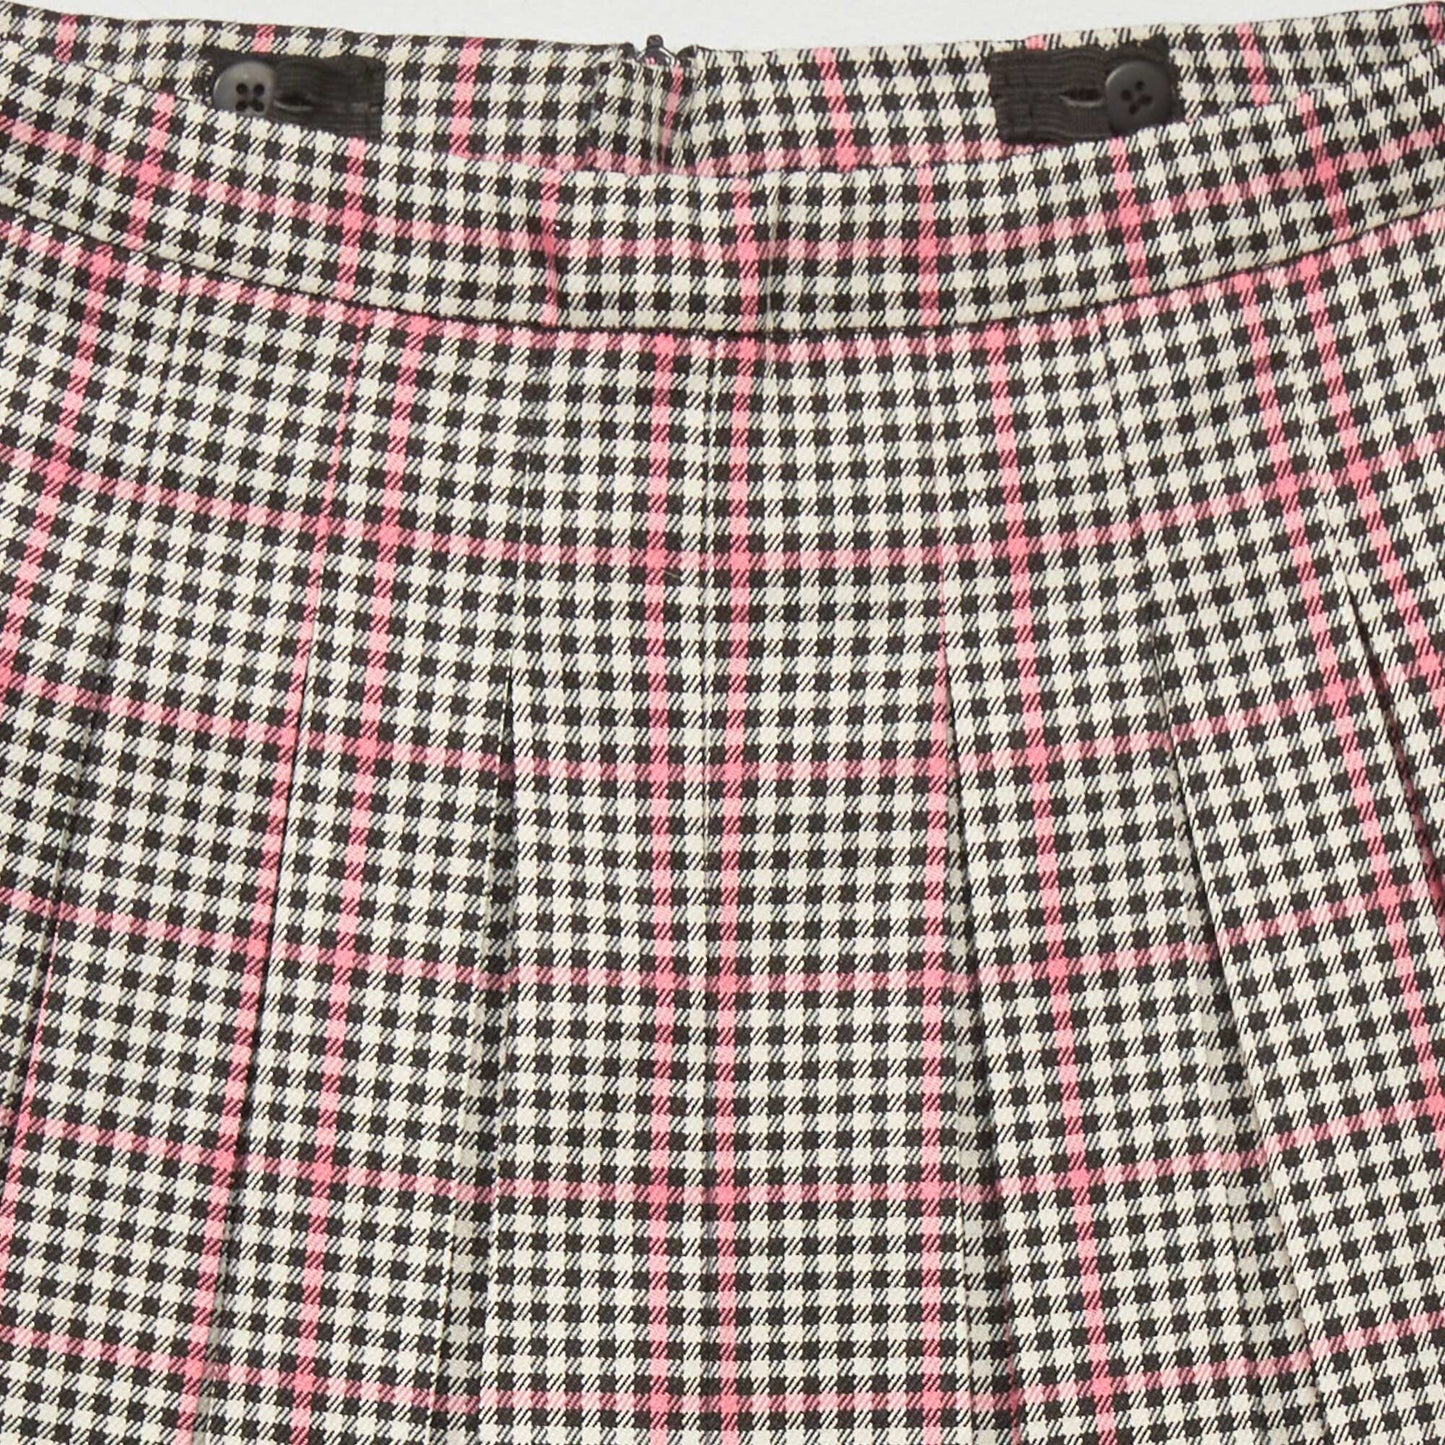 Short pleated skirt PINK